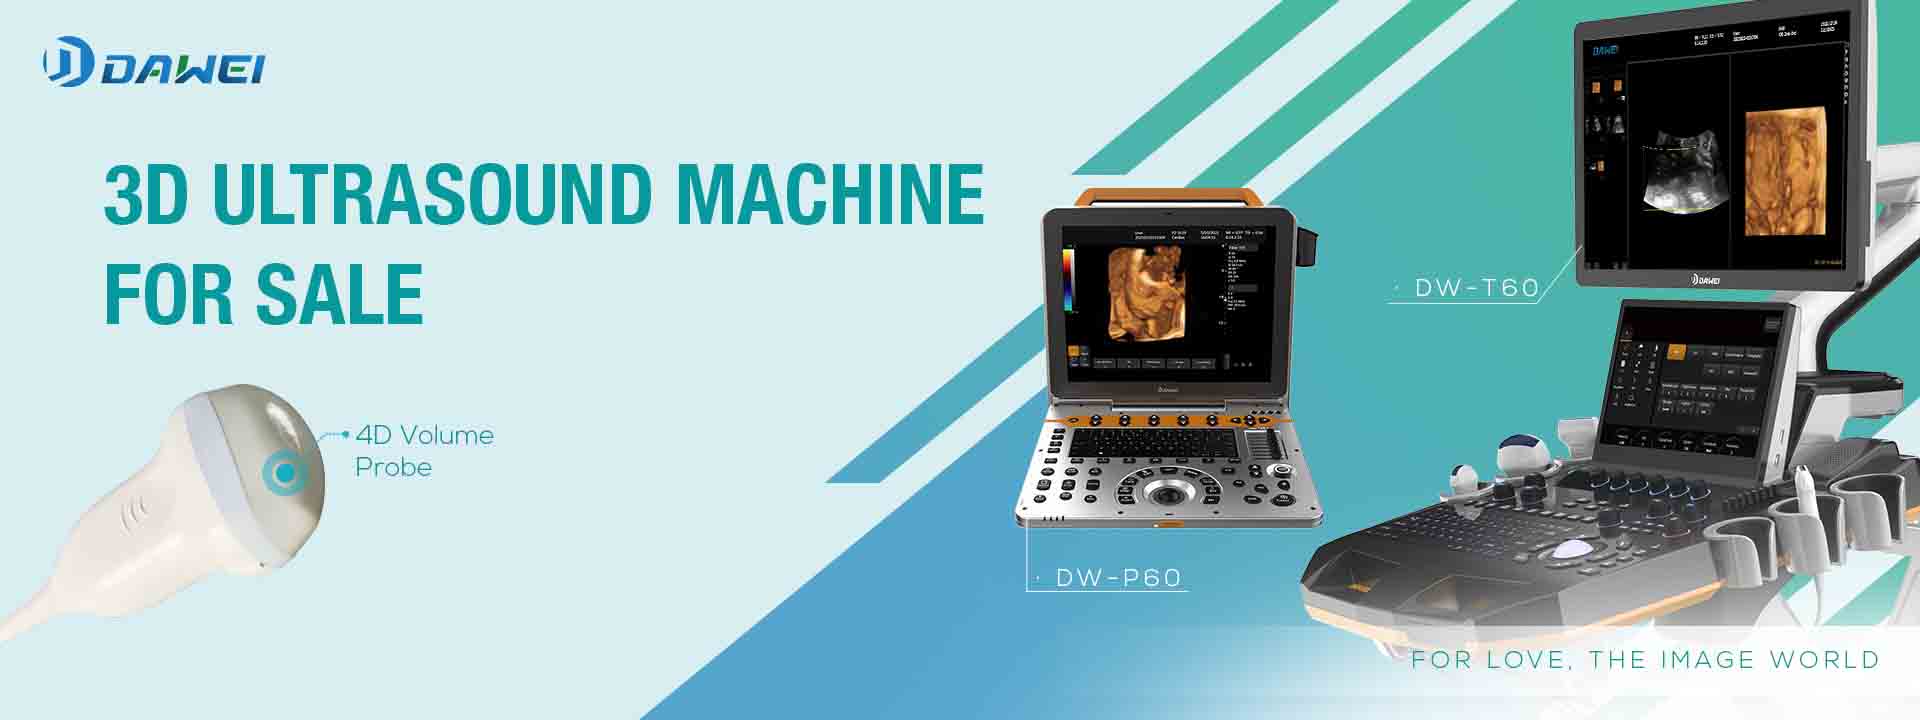 Dawei Medical 3D Ultrasound Machine for Sale